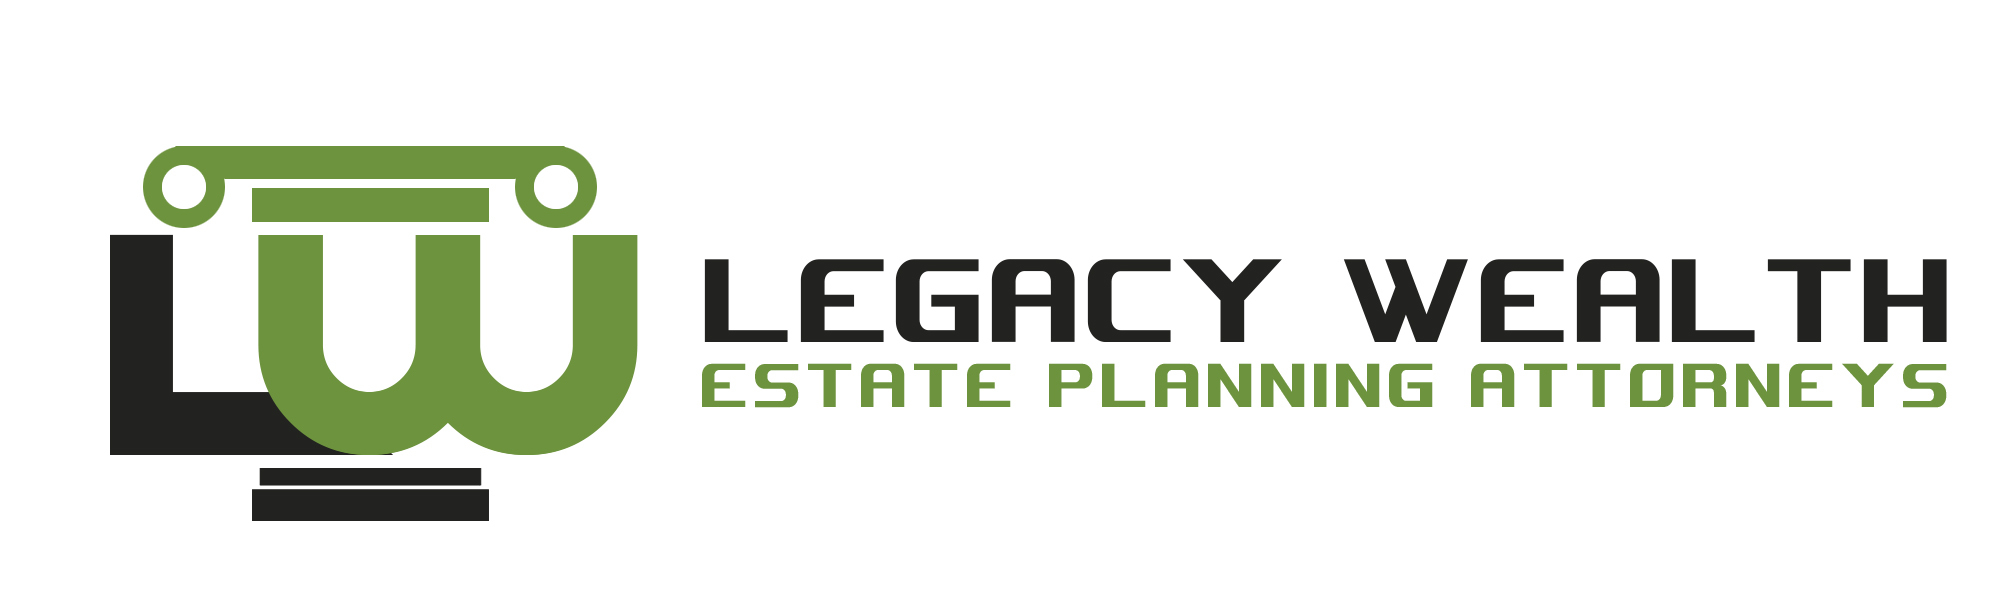 Legacy-Wealth-Estate-Planning-Attorneys-Logo-1.jpg